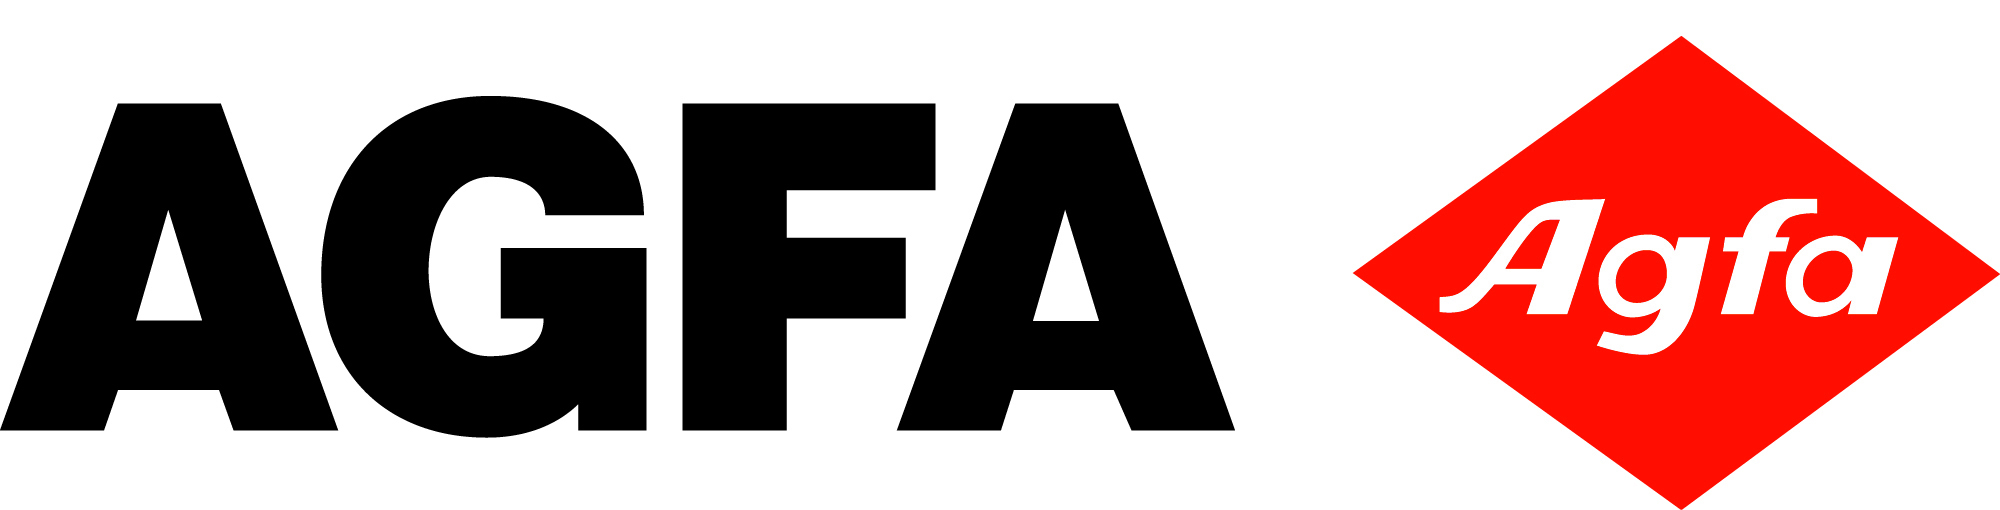 Agfa_logo_color